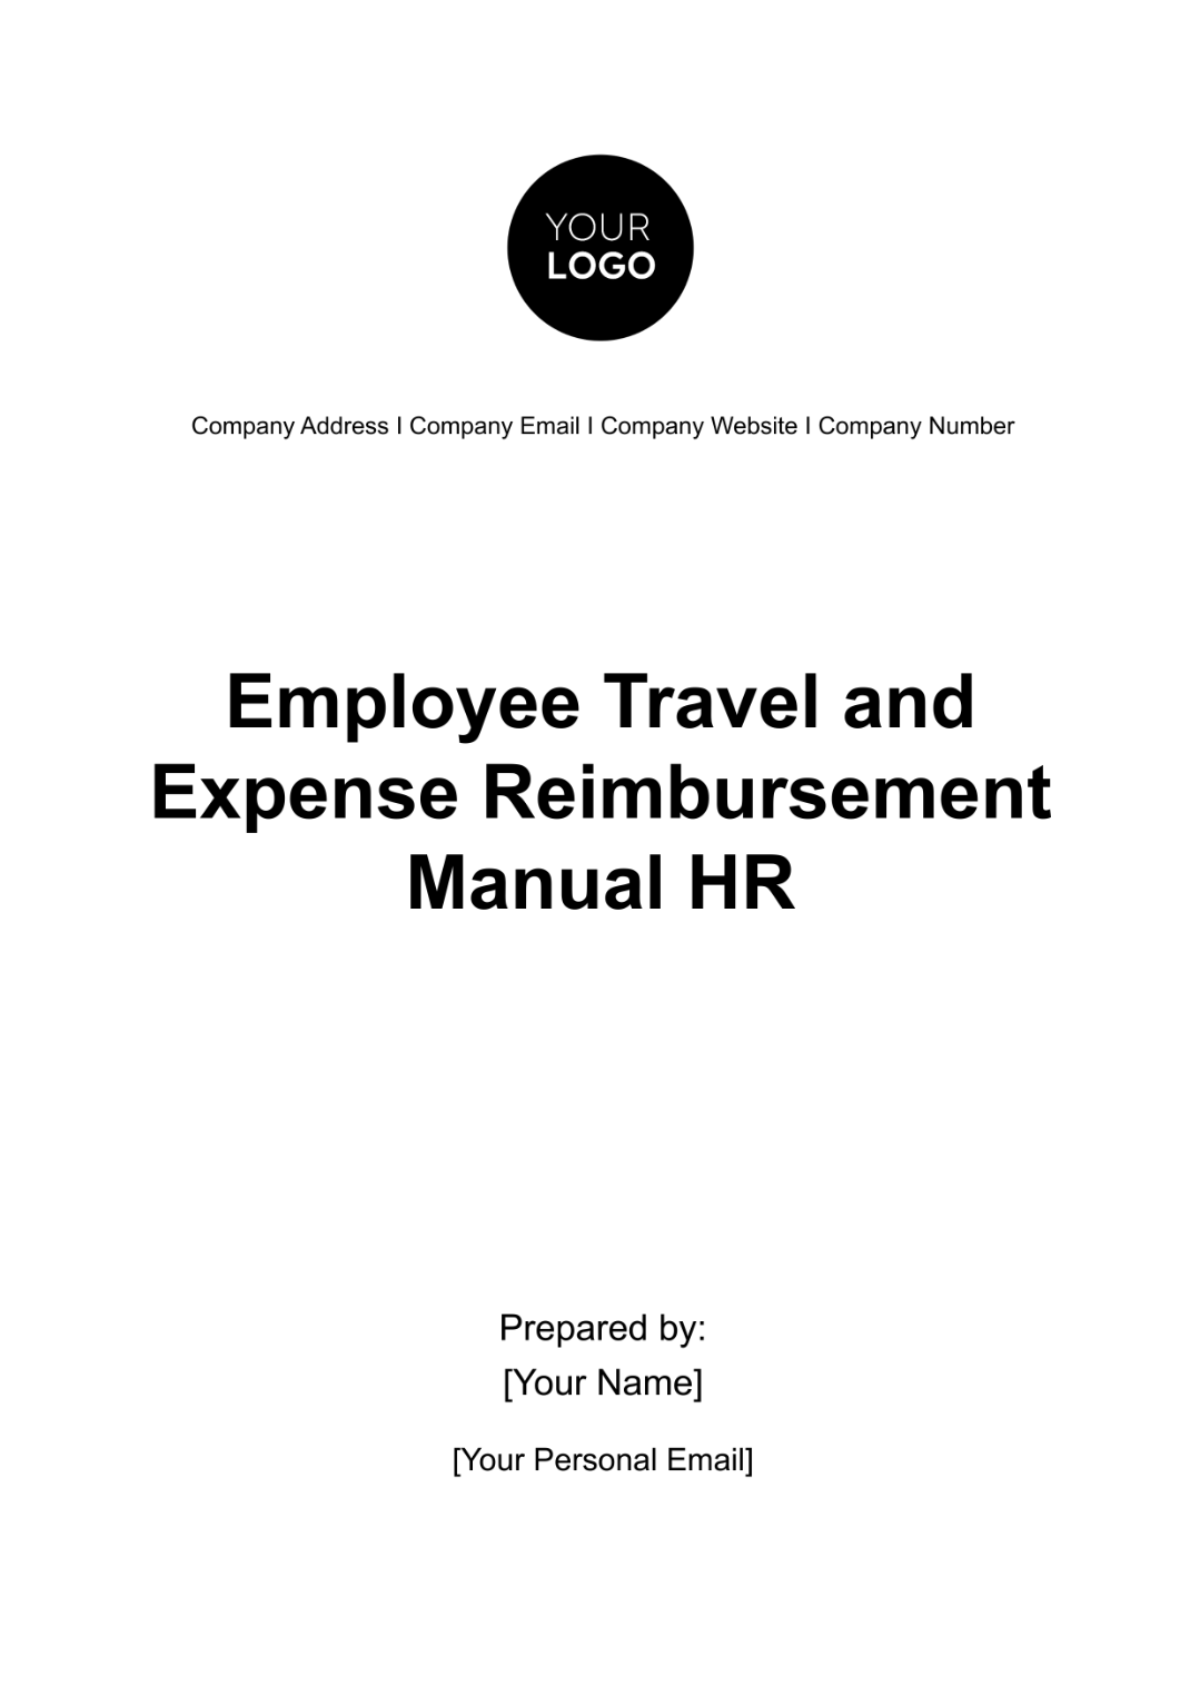 Employee Travel and Expense Reimbursement Manual HR Template